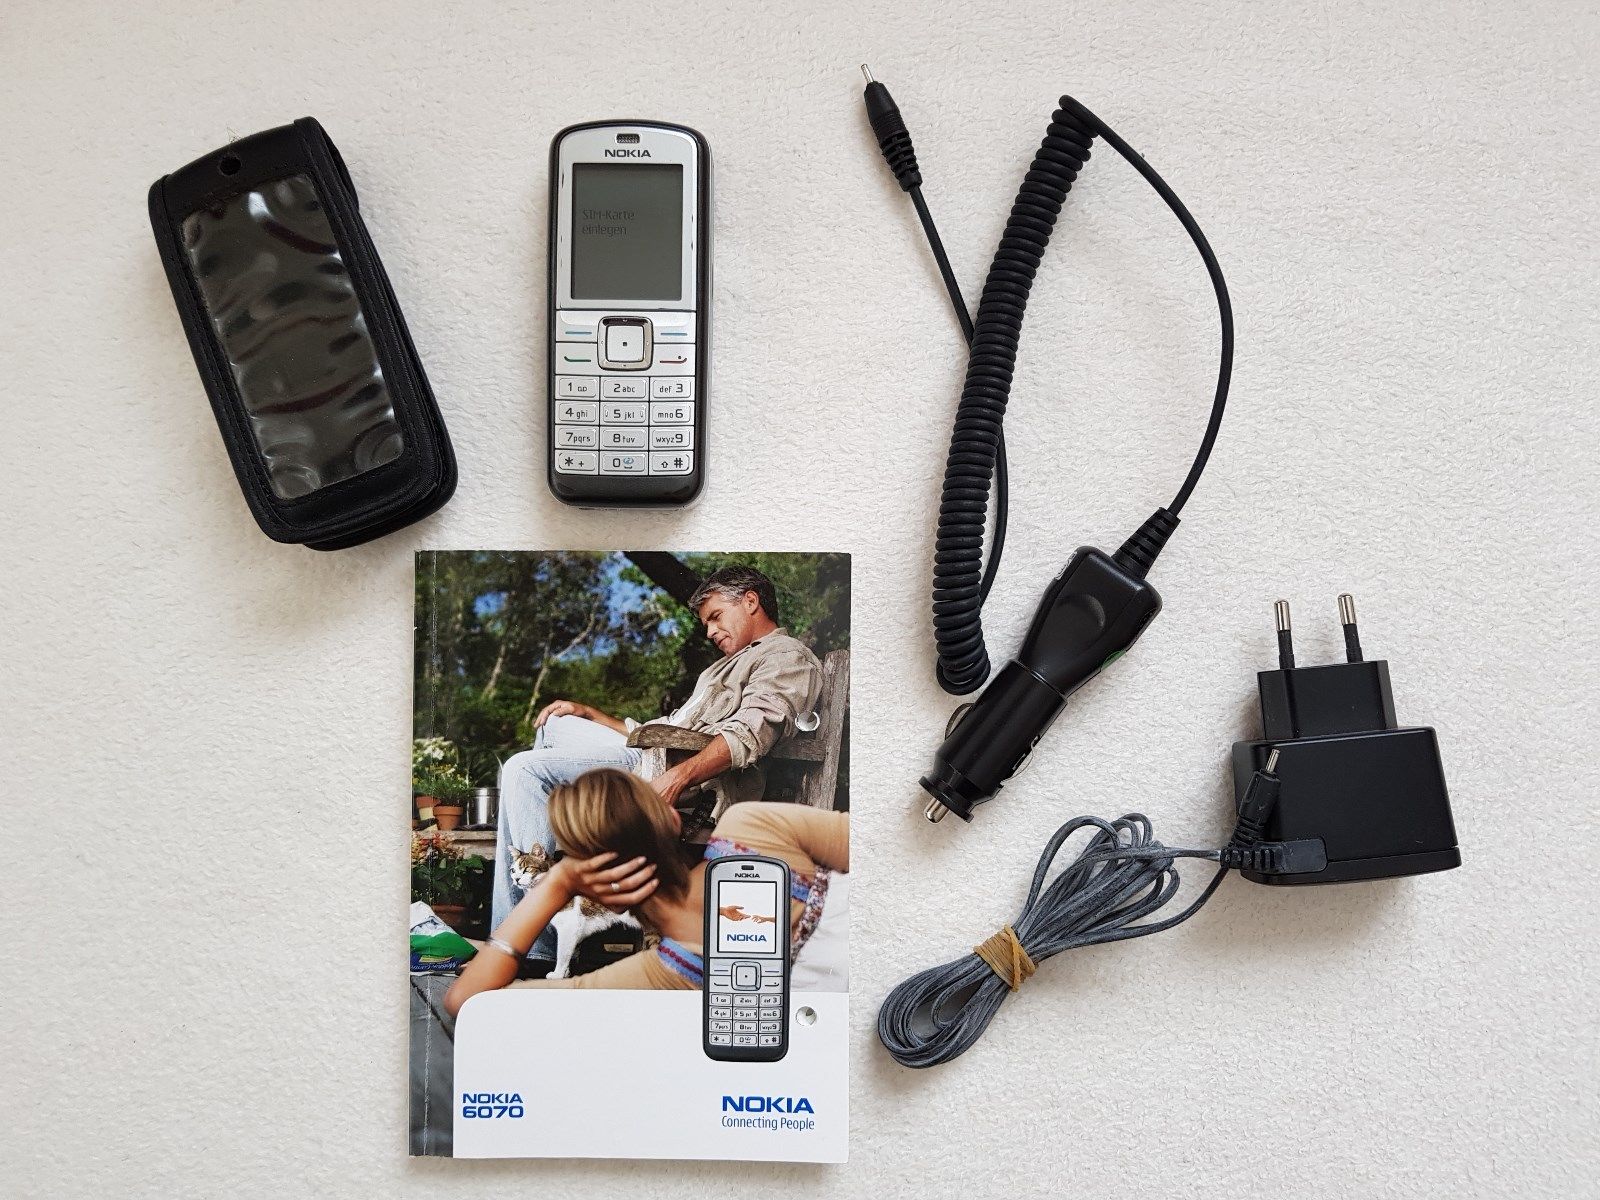 Nokia 6070 - Dunkelgrau (Ohne Simlock) Handy | eBay